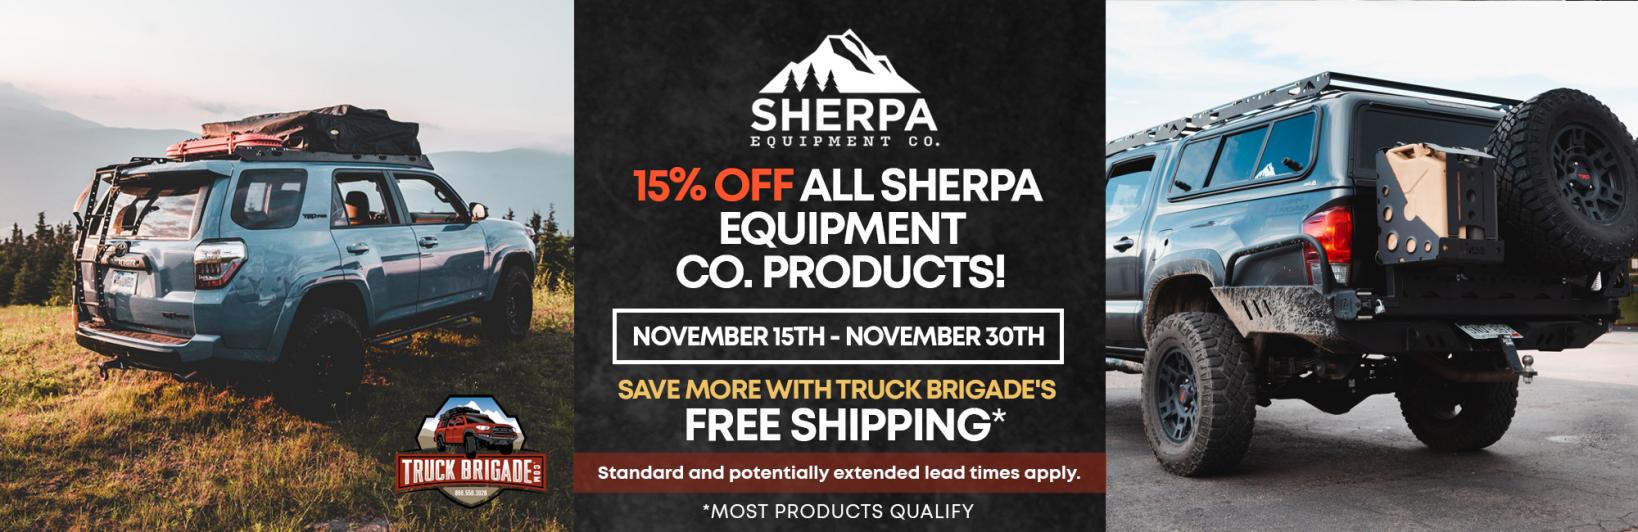 Sherpa Equipment Co. Black Friday Savings!-sherpa_equipment_co_black_friday_web_banner-jpg